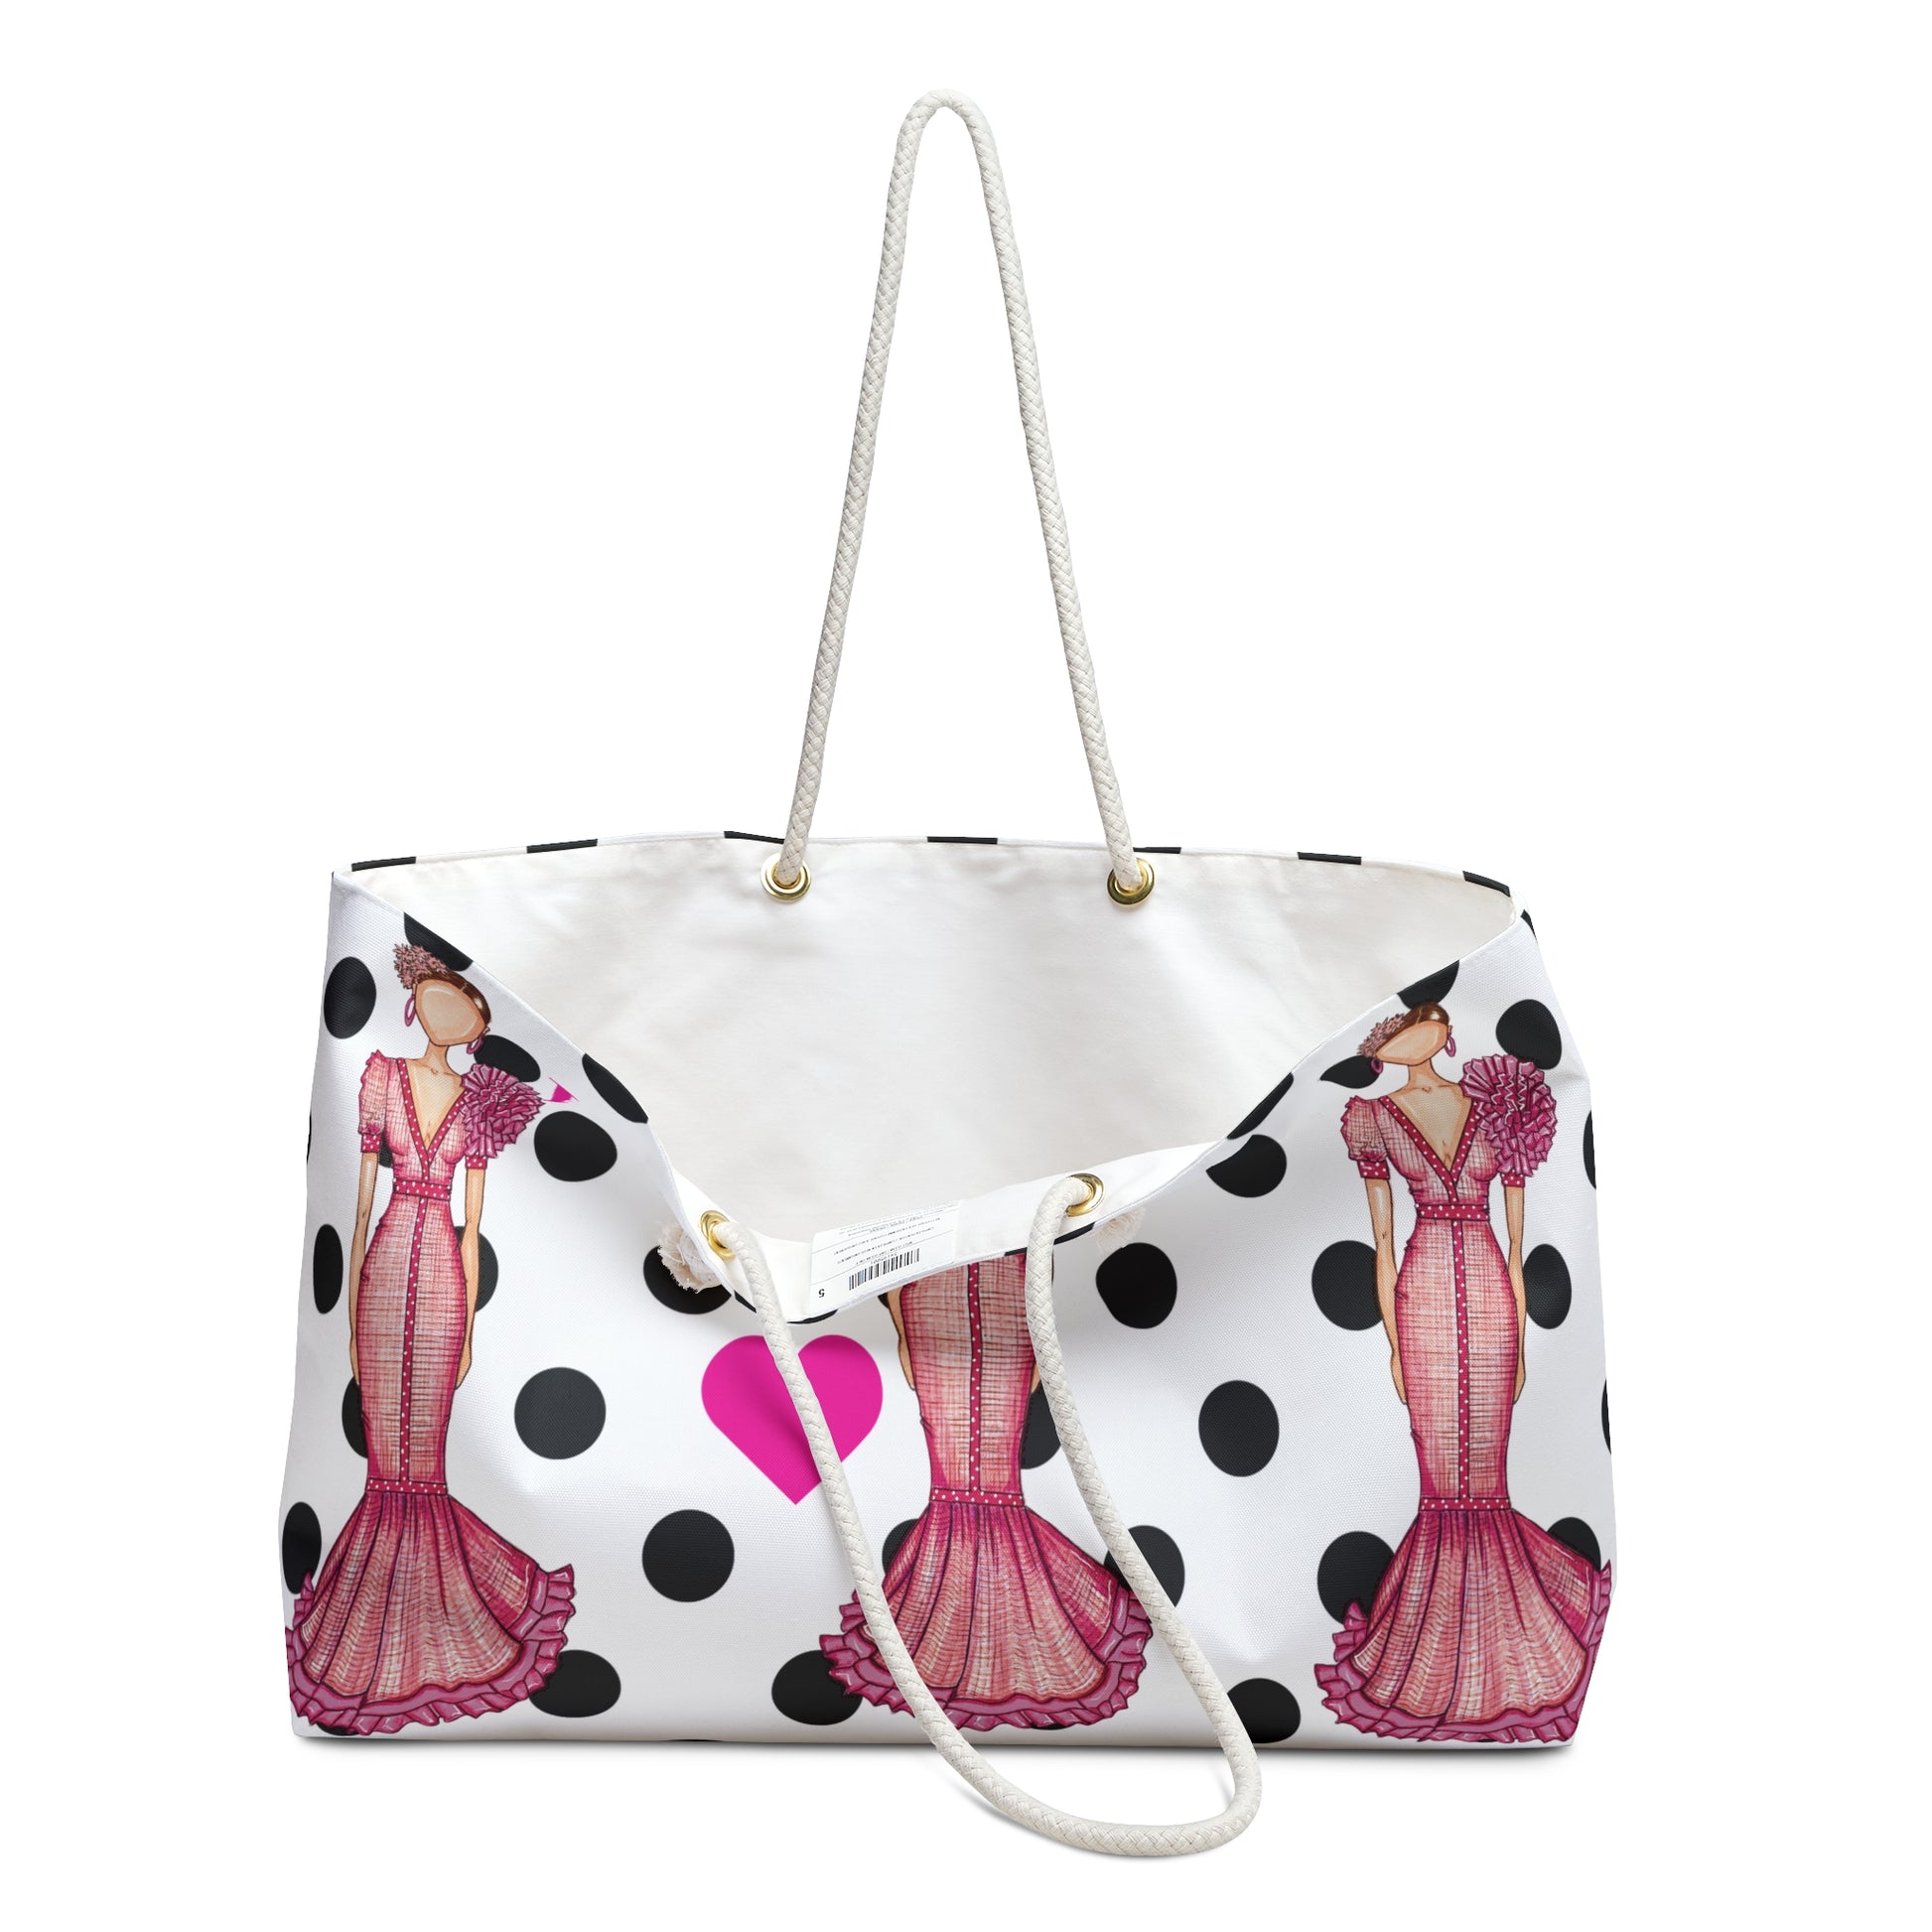 a polka dot purse with a woman's dress on it